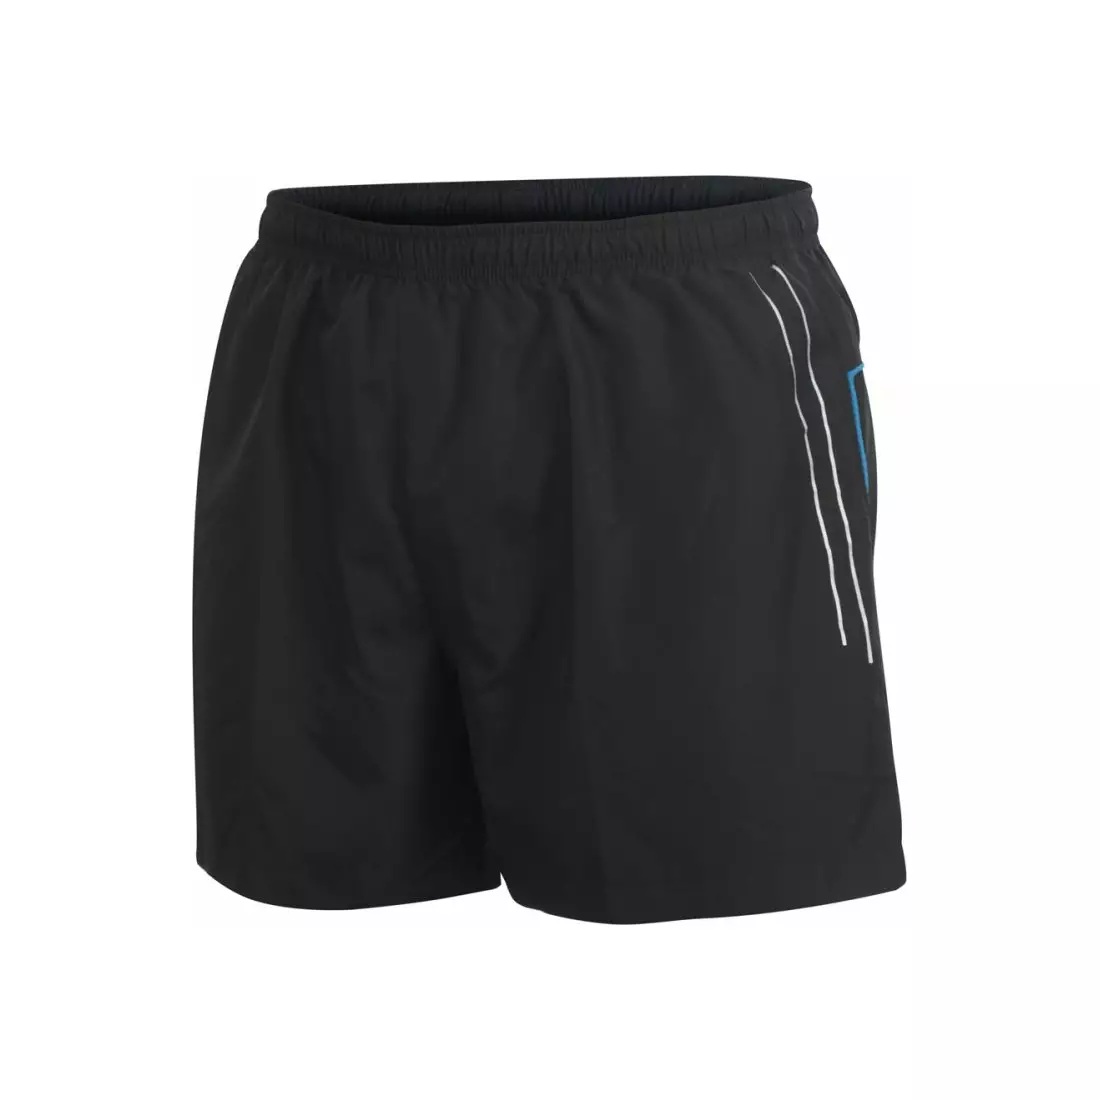 CRAFT ACTIVE RUN 1900395-9330 - men's running shorts